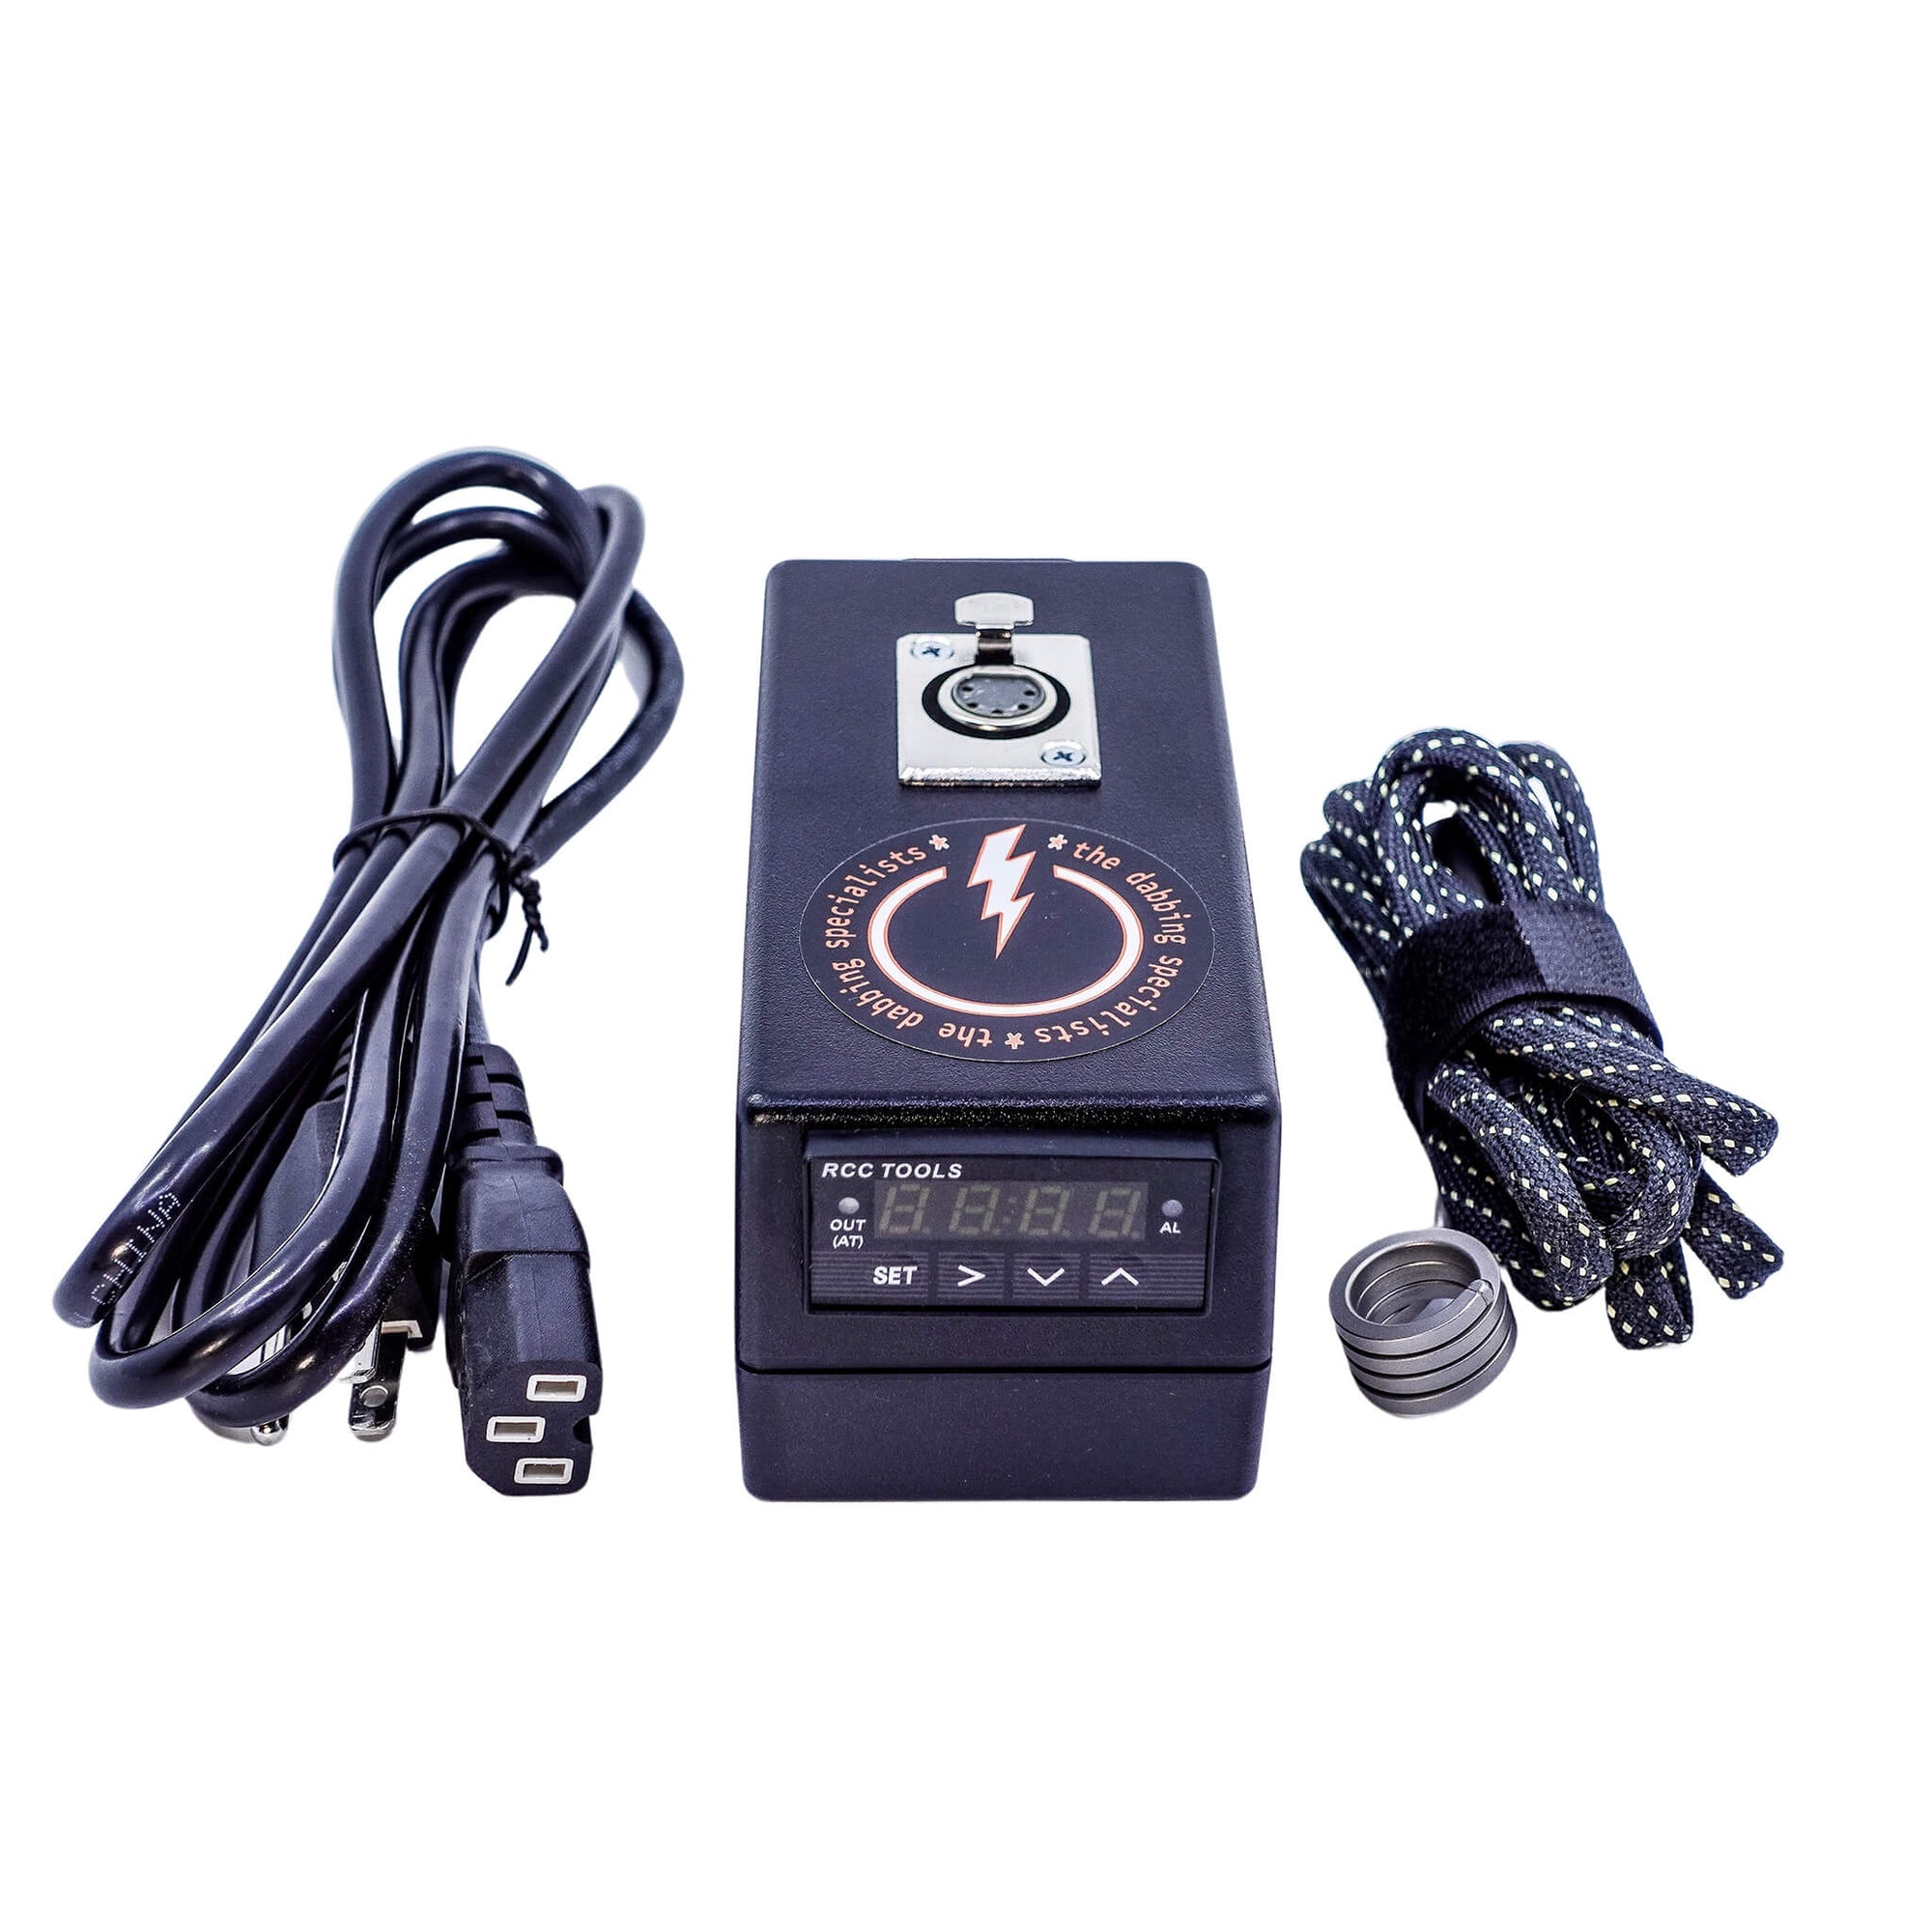 Portable BlackBar eNail | Complete eNail Kit View 16mm Coil Heater | the dabbing specialists